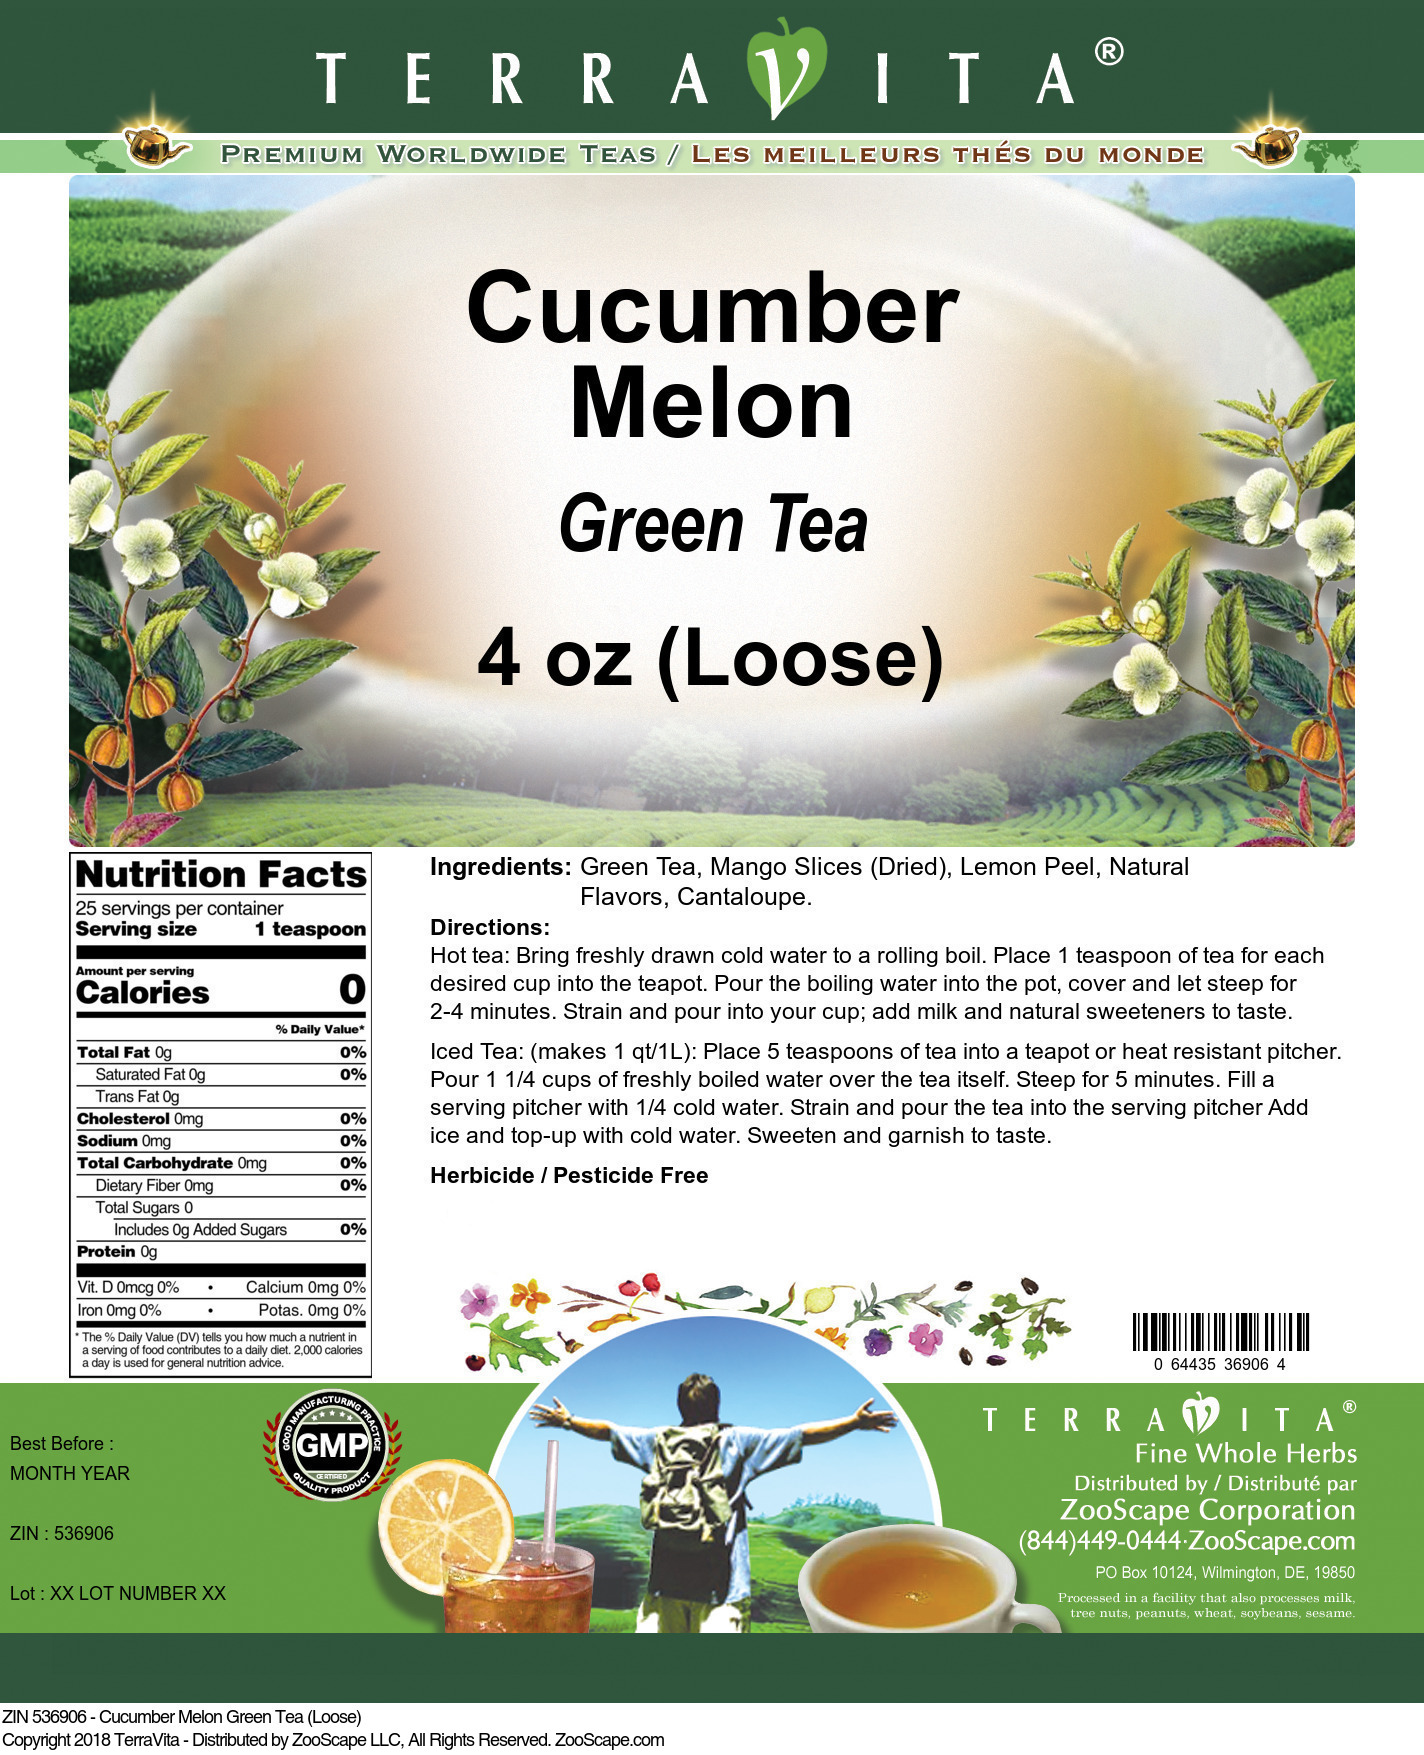 Cucumber Melon Green Tea (Loose) - Label